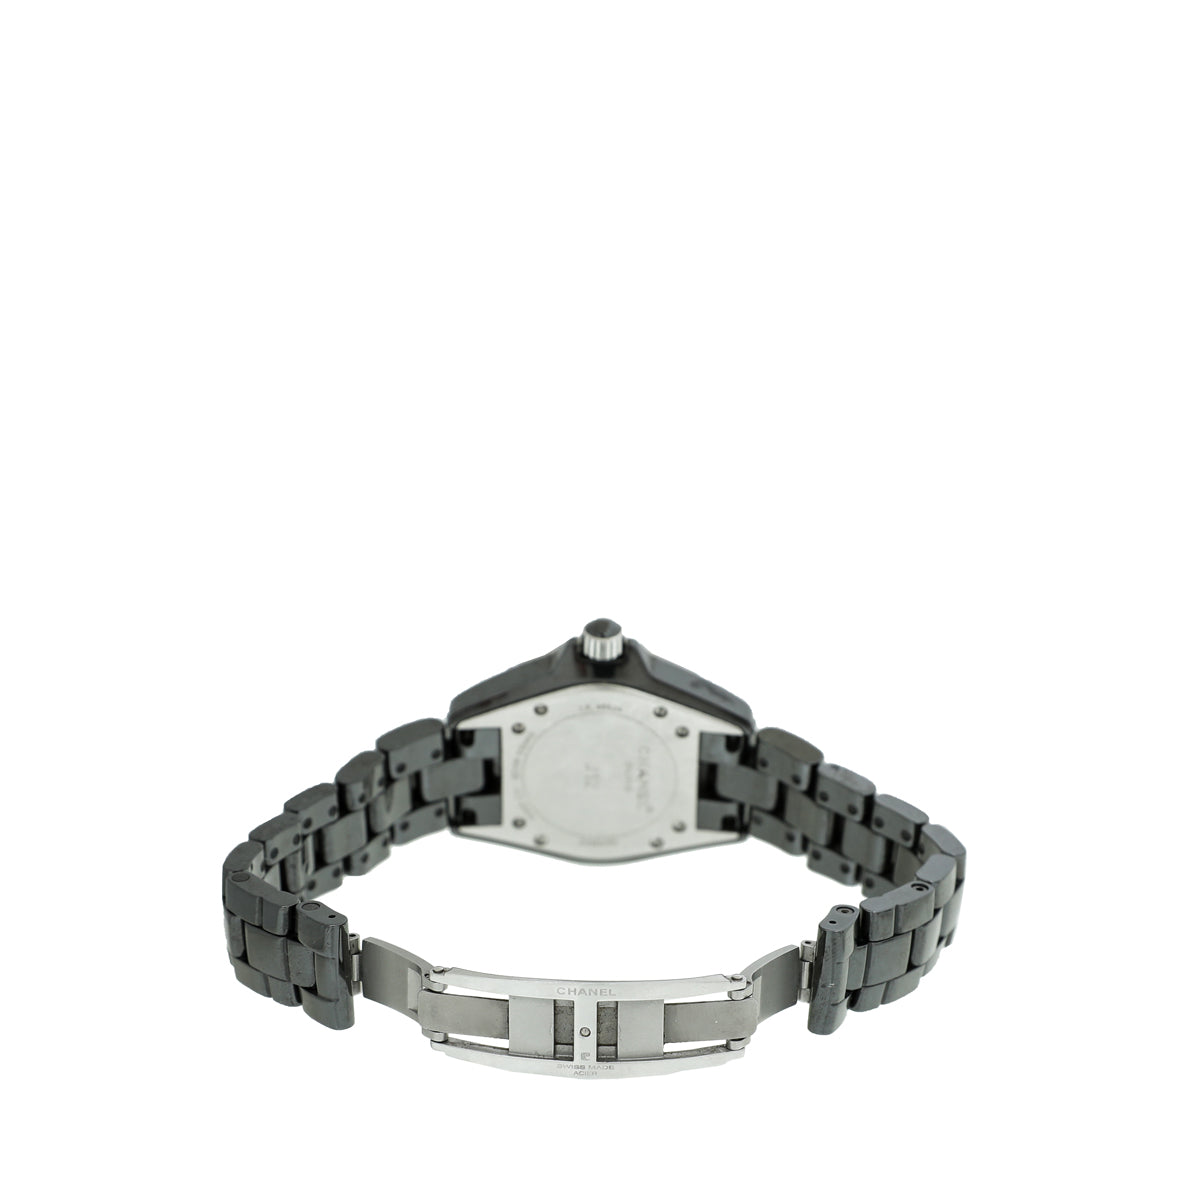 Chanel ST.ST Black Ceramic J12 34mm Quartz Watch